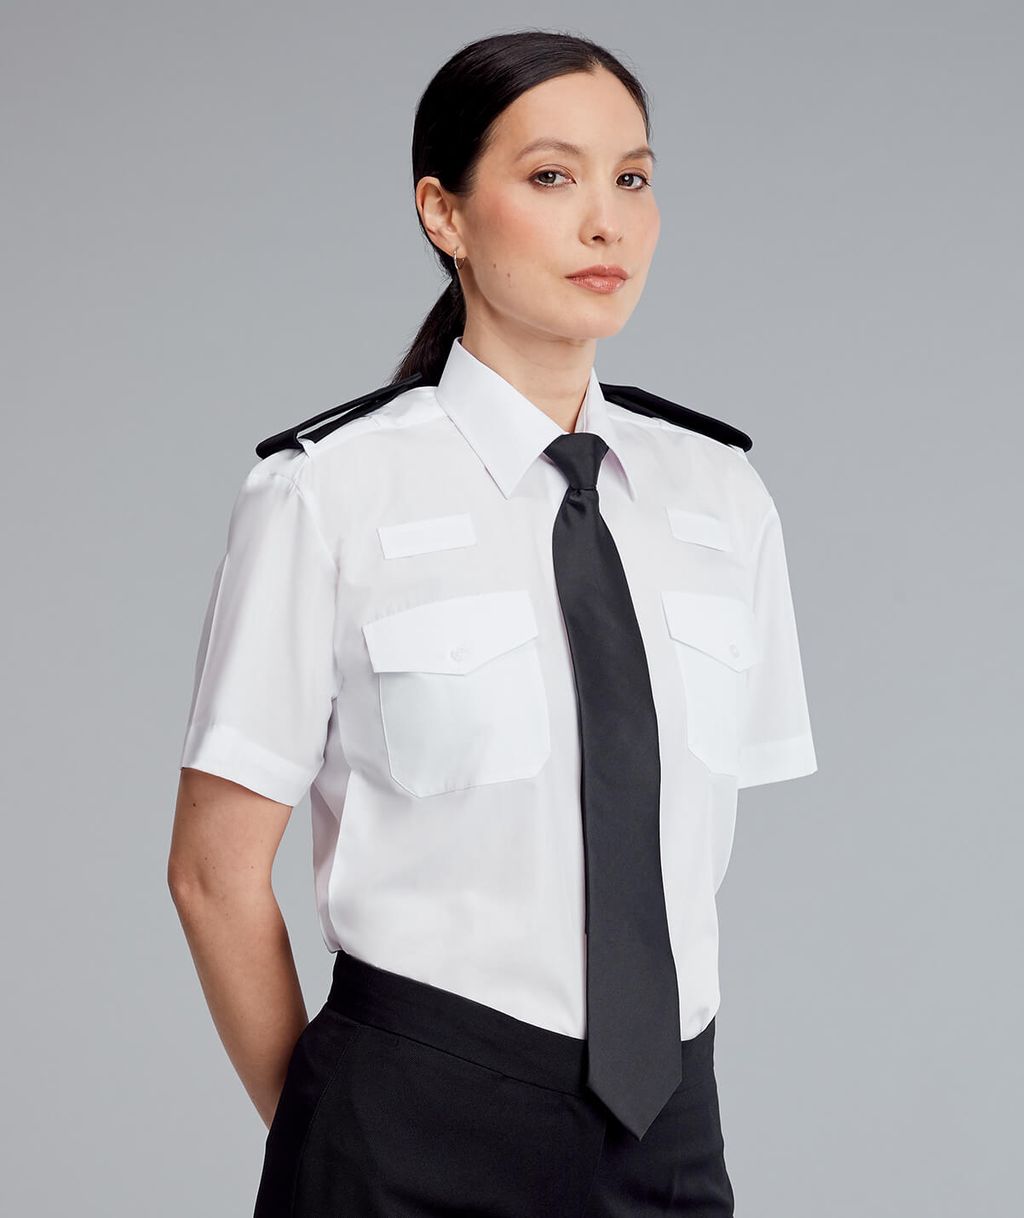 Women's Security Shirts & Pilot Shirts